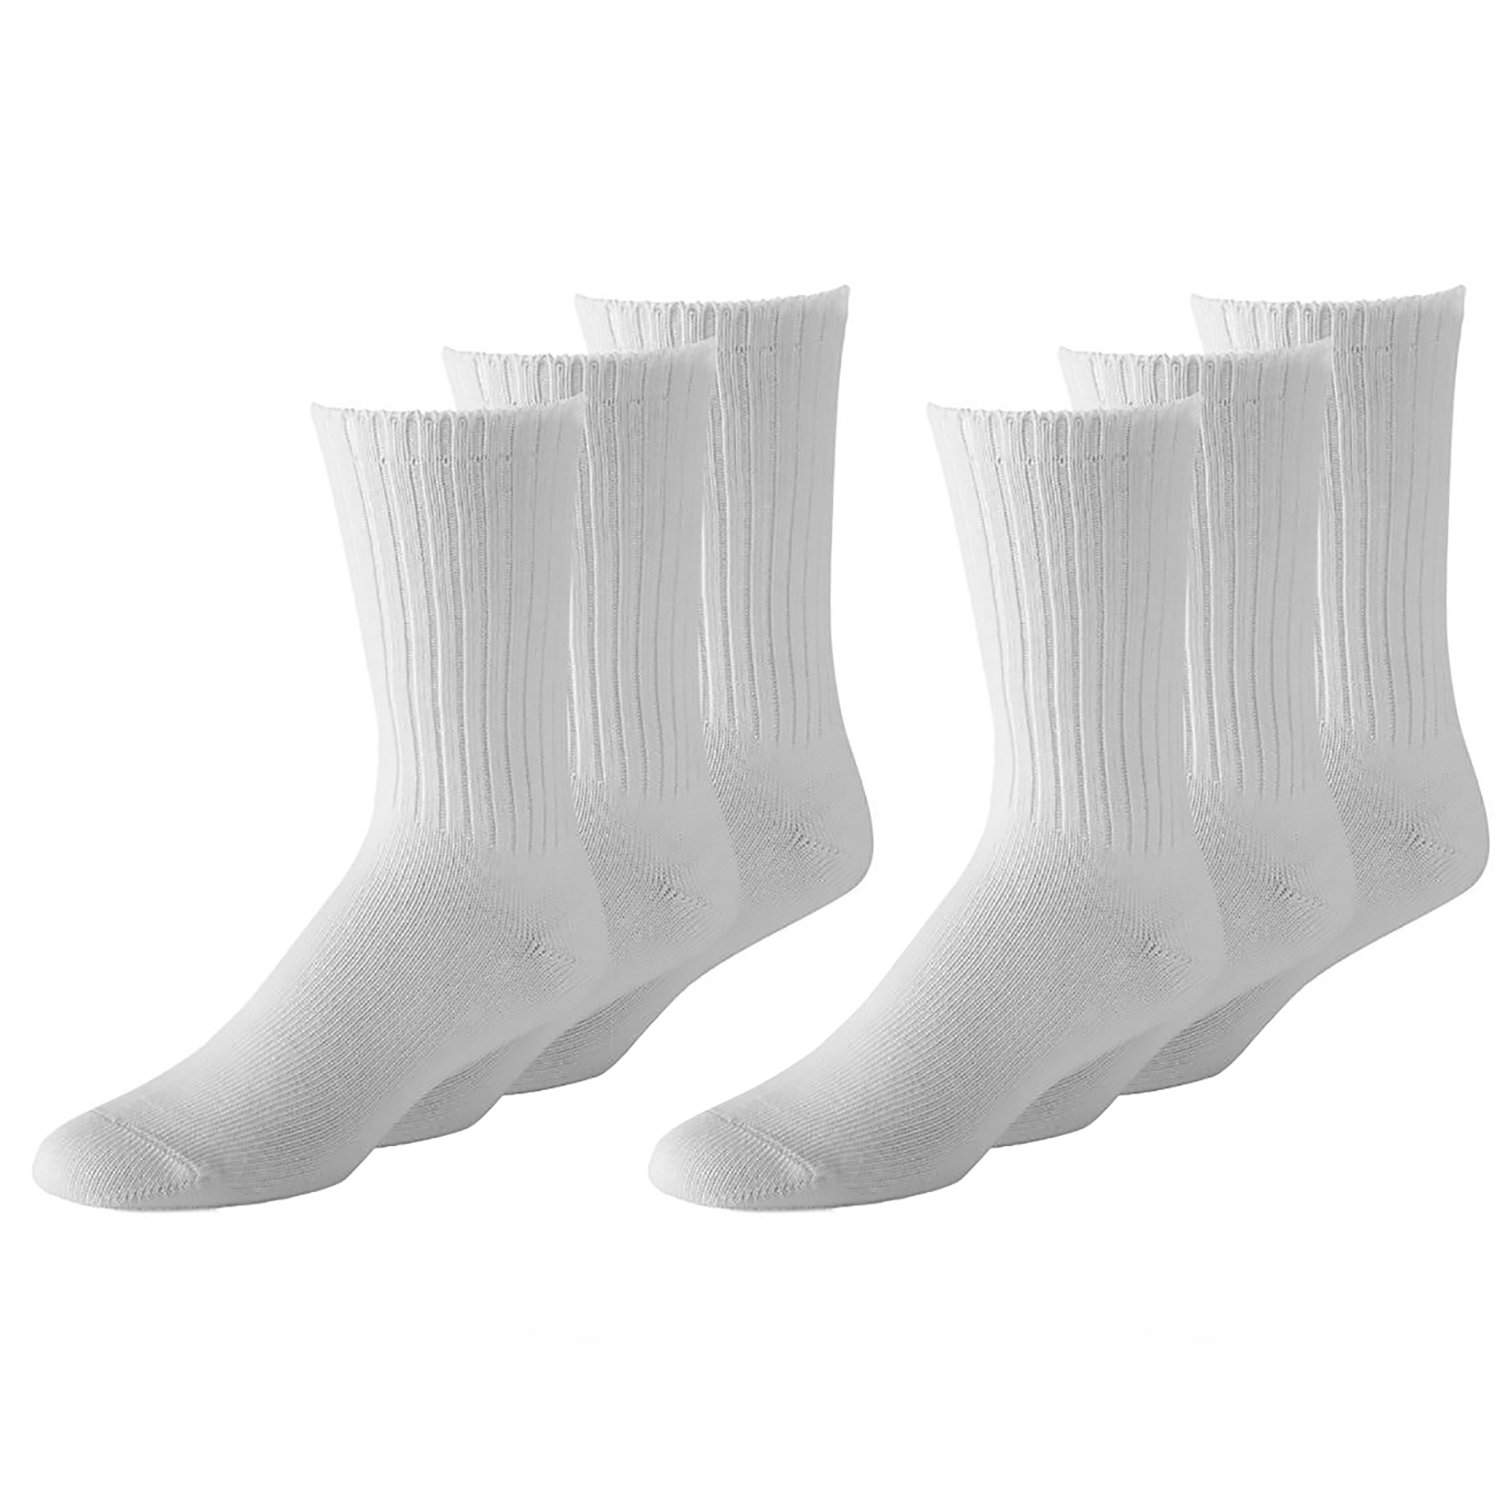 168 Pairs Qraftsy Men's Athletic Crew Socks - Bulk Lot Packs - Any Shoe Size